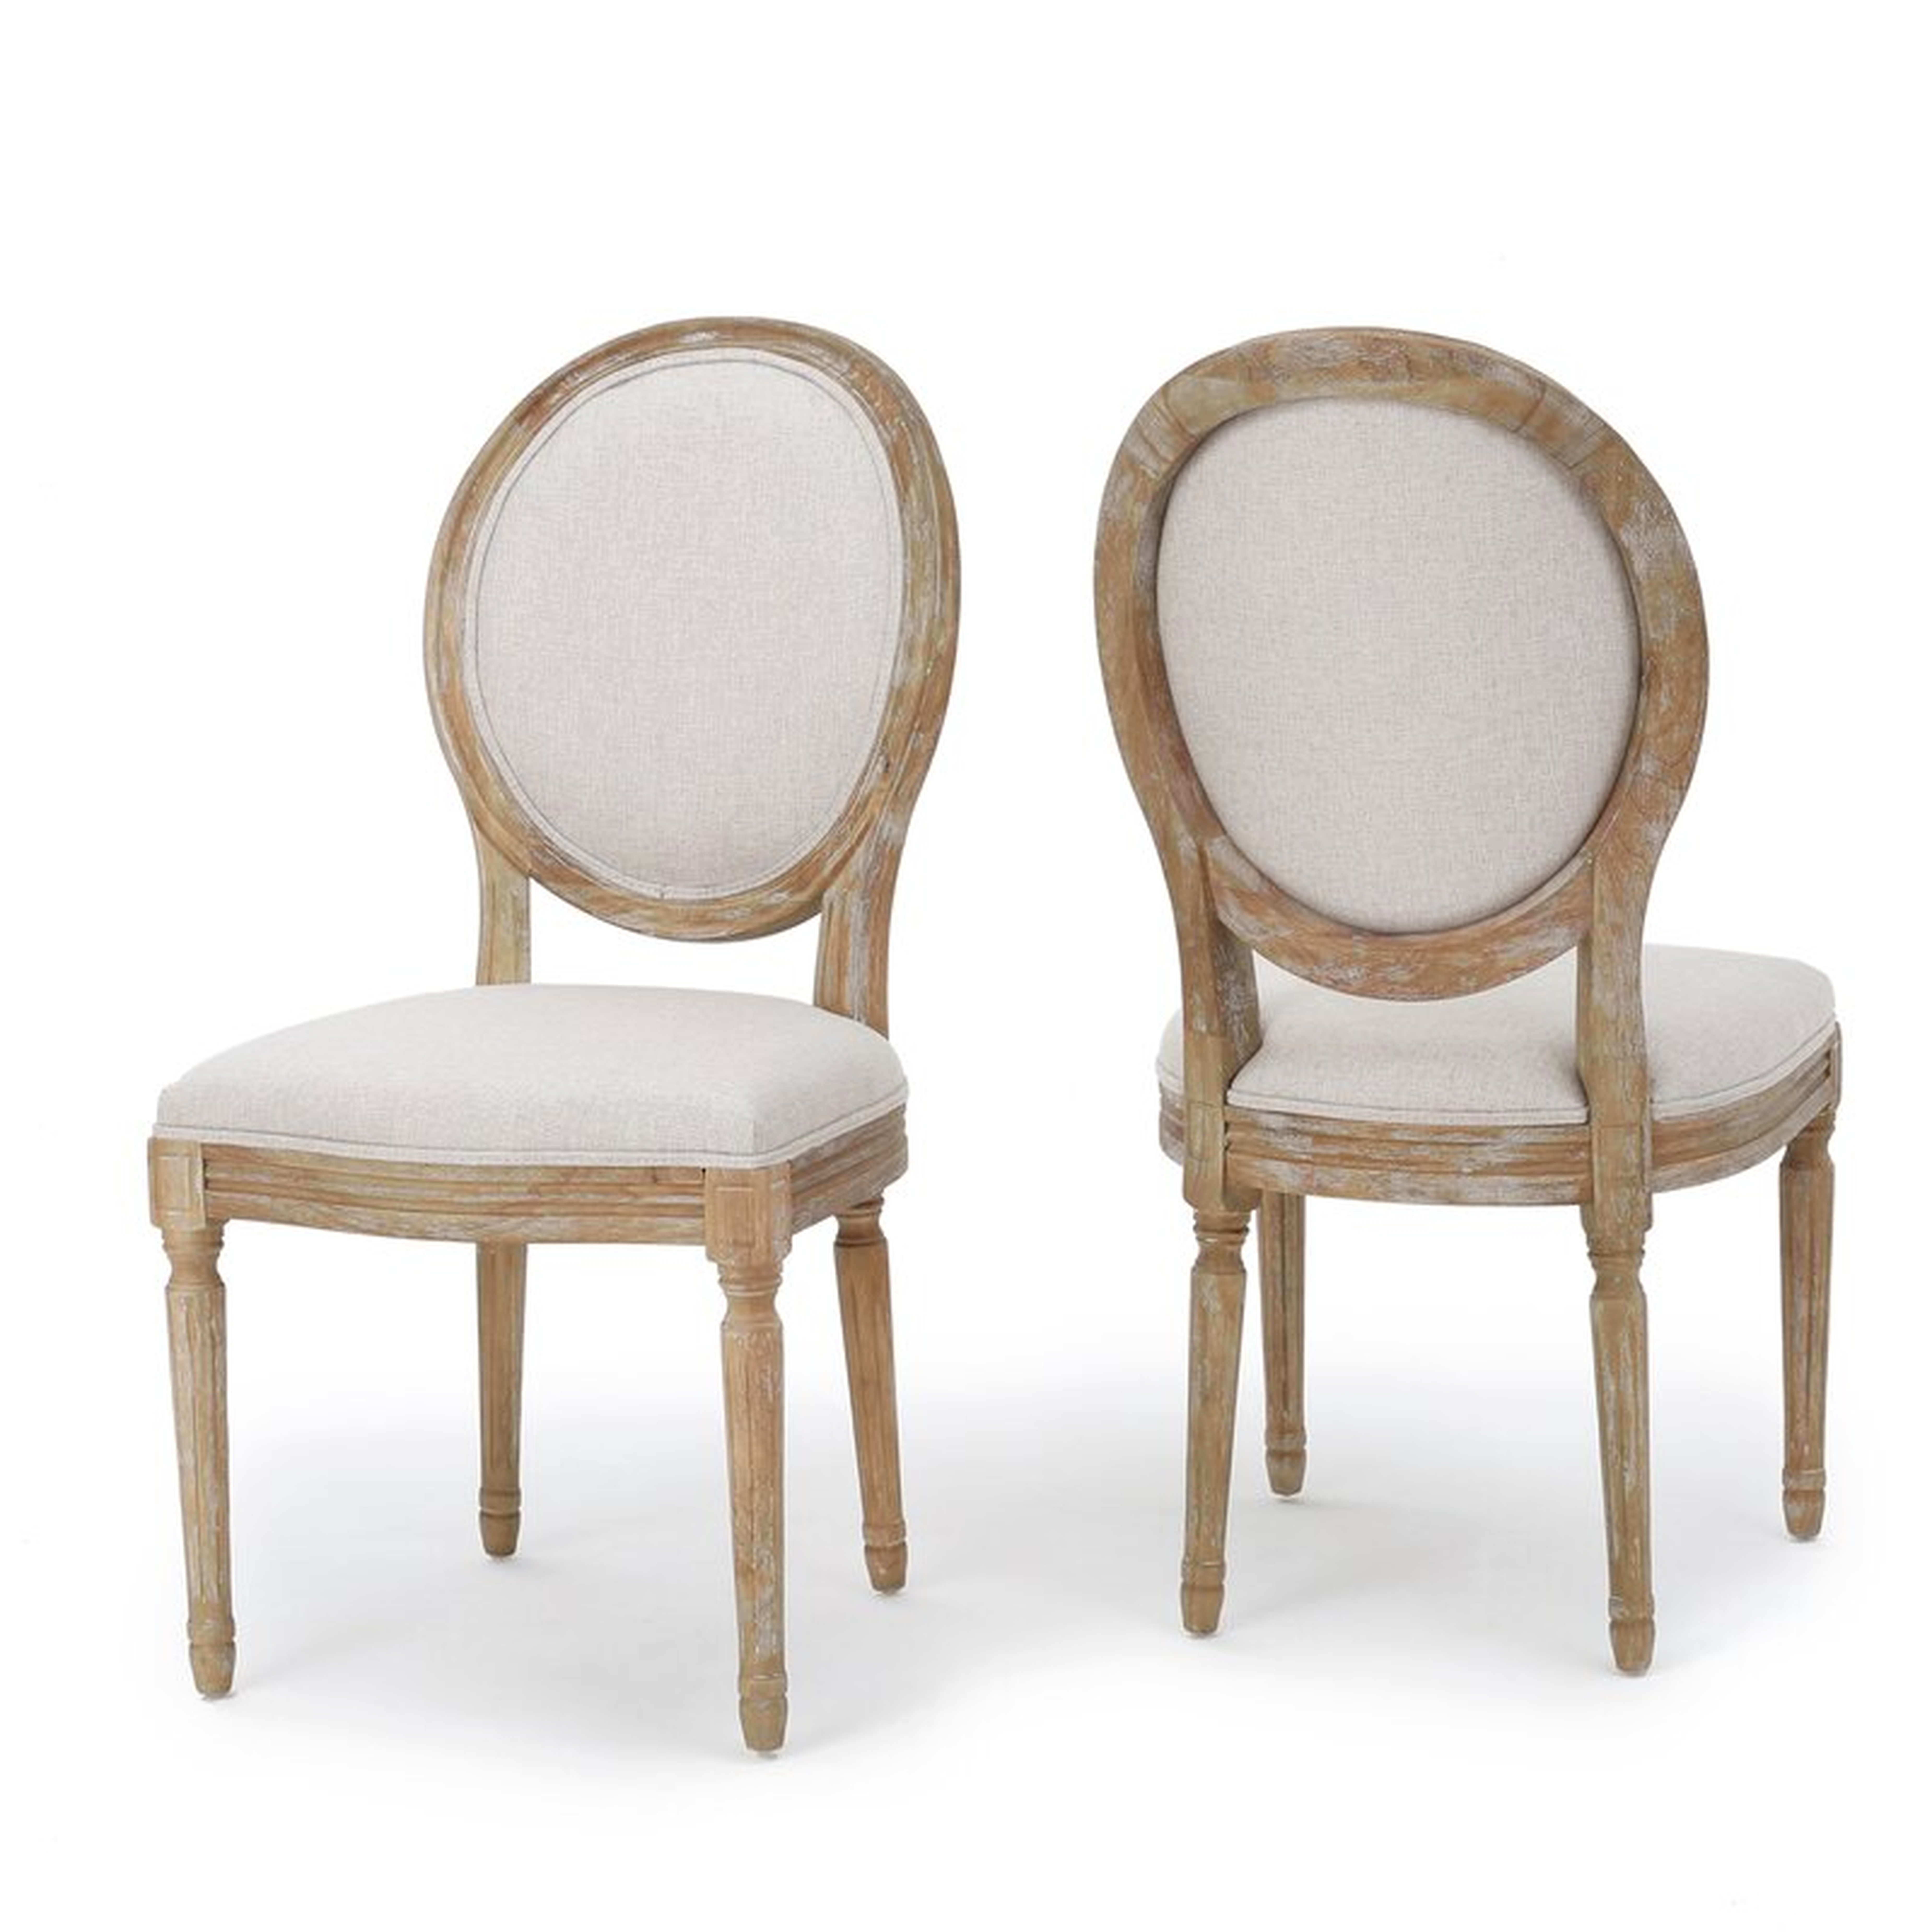 Bluffton Side Chair (set of 2) - Wayfair